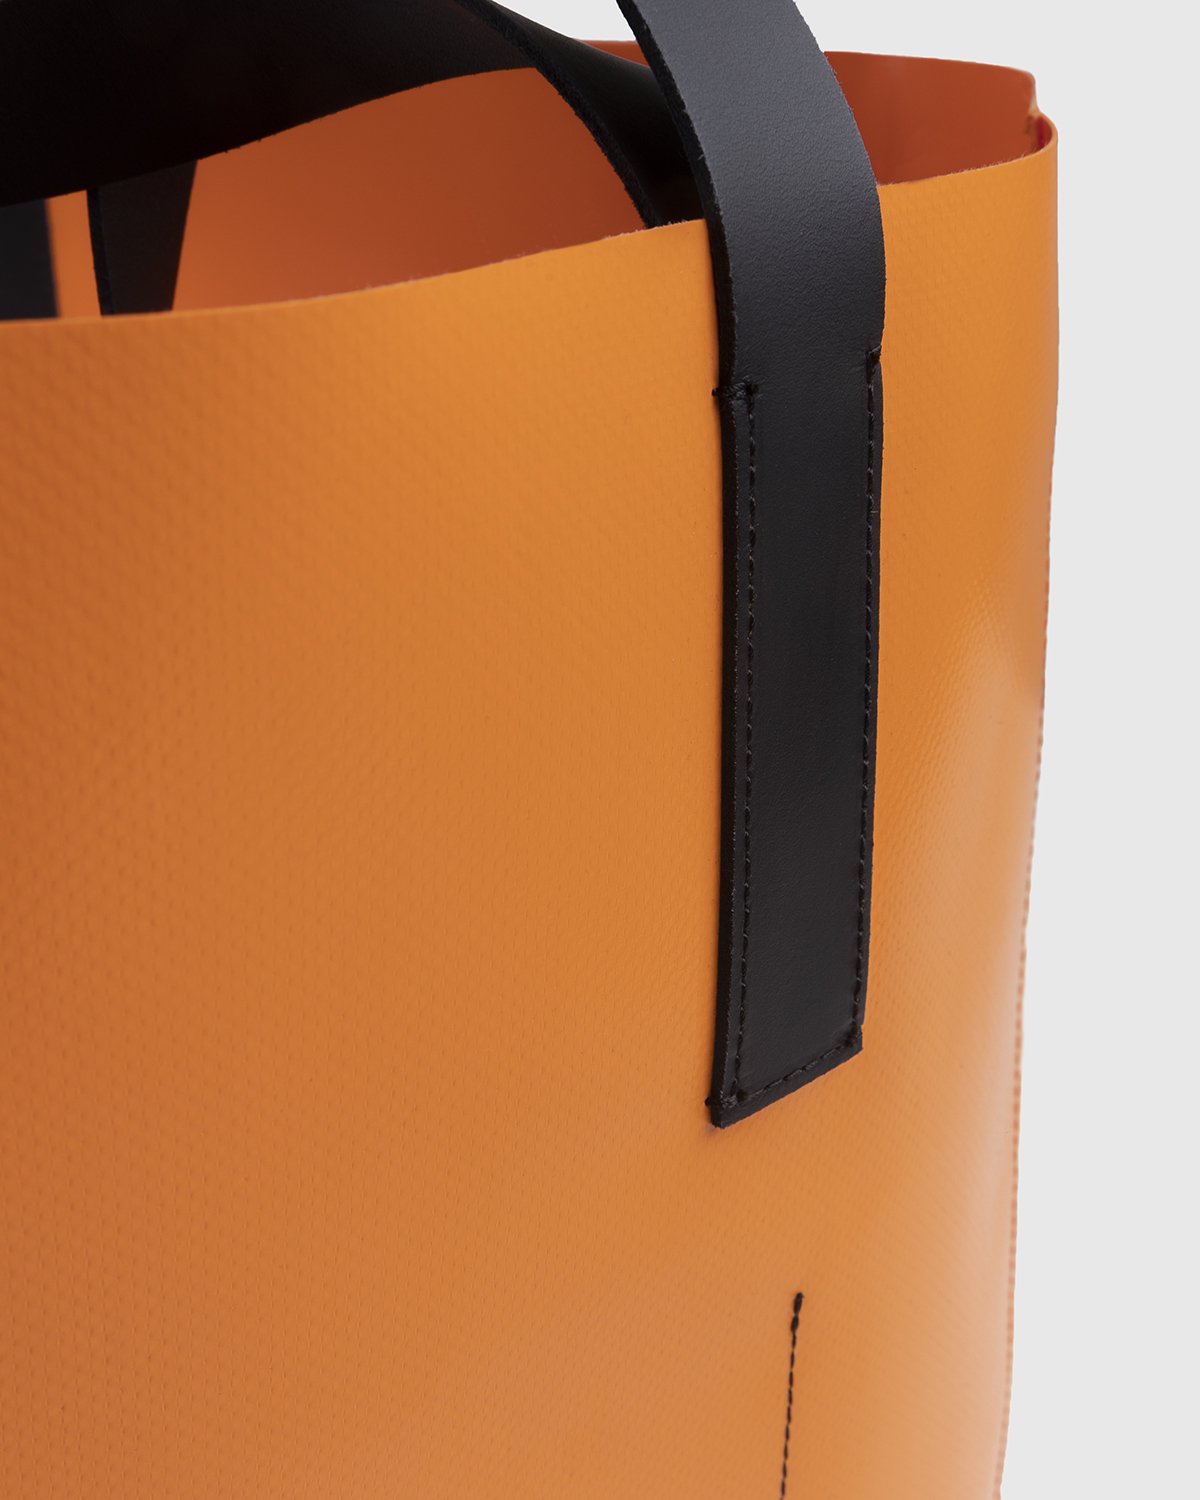 Dries van Noten - Tote Bag Orange - Accessories - Orange - Image 4